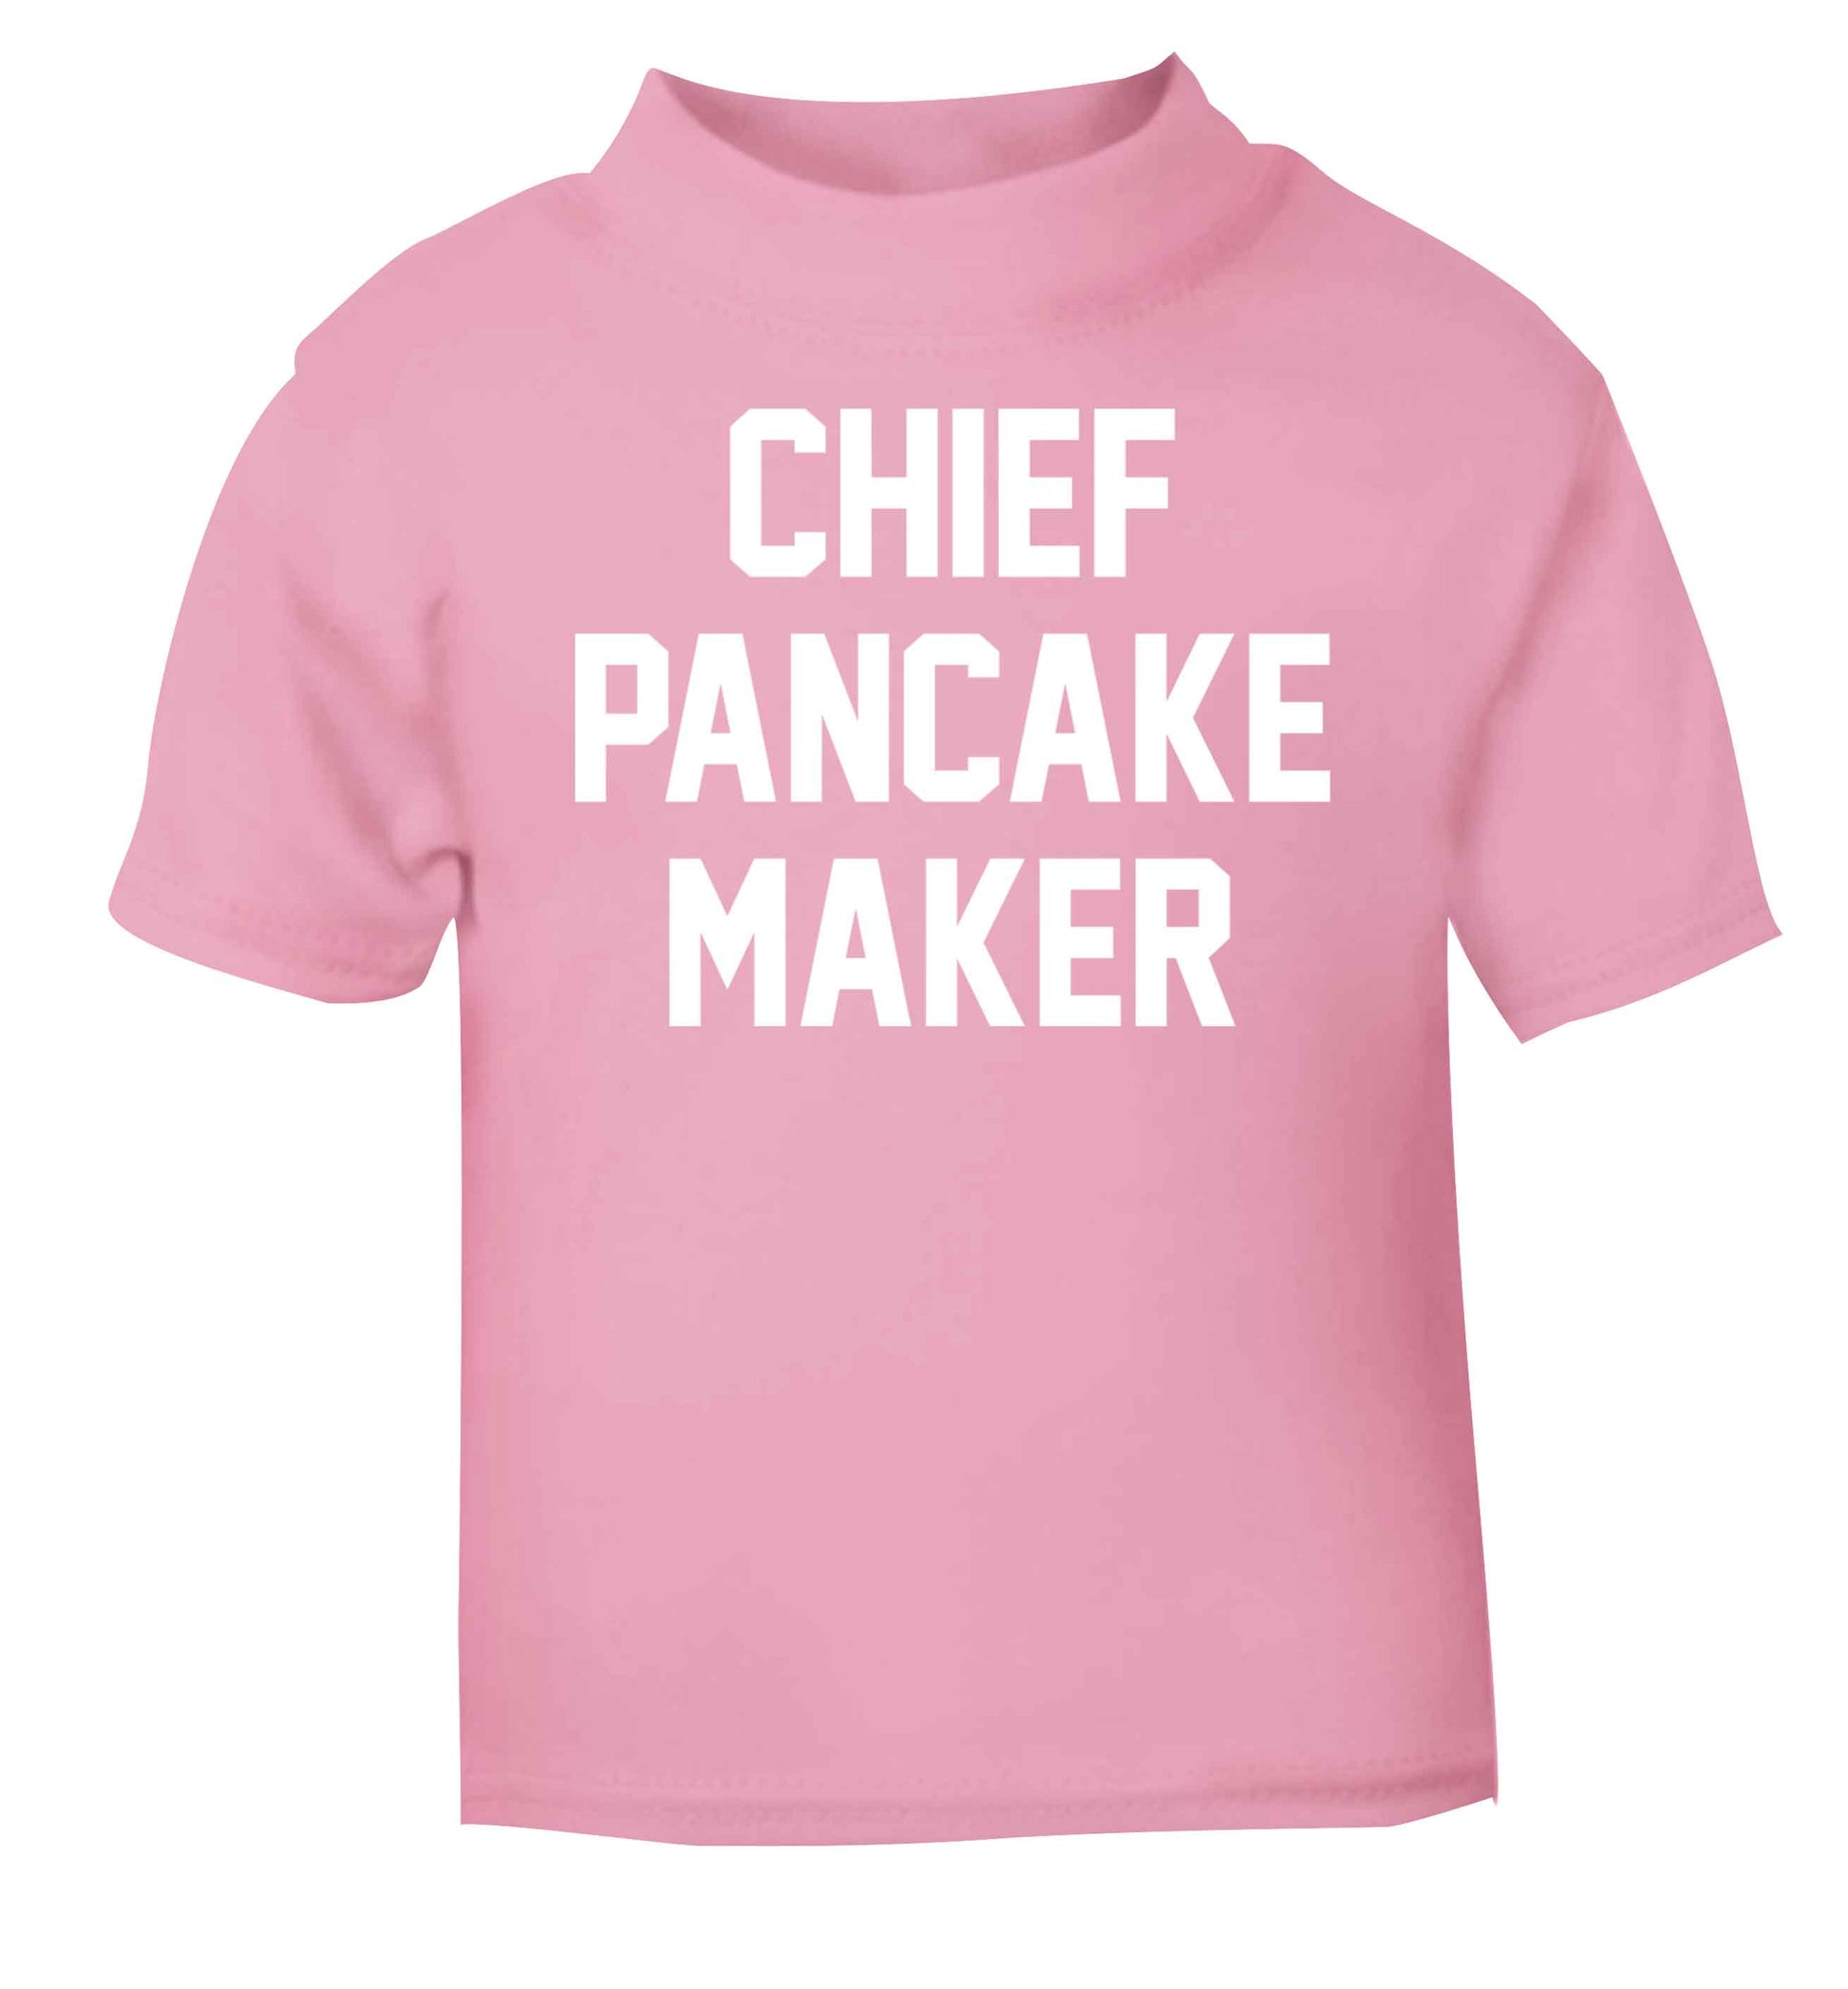 Chief pancake maker light pink baby toddler Tshirt 2 Years